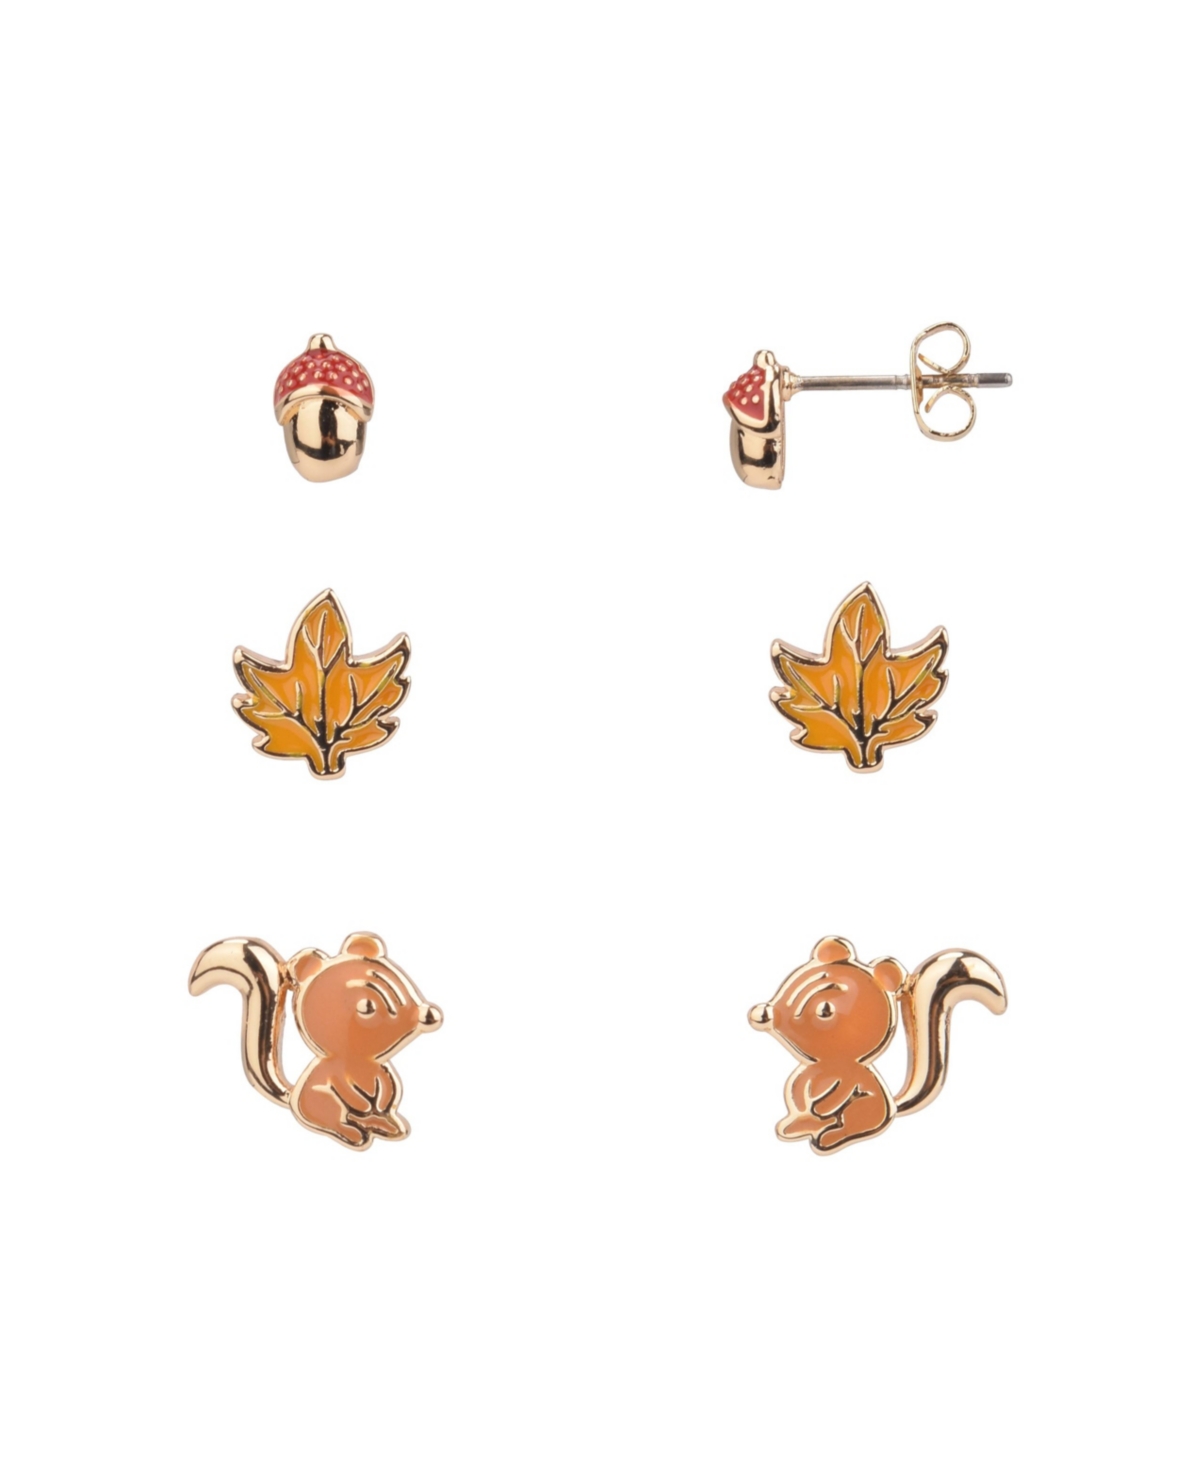 Fao Schwarz Gold-tone Squirrel, Leaf And Acorn Trio Earring Set, 6 Pieces